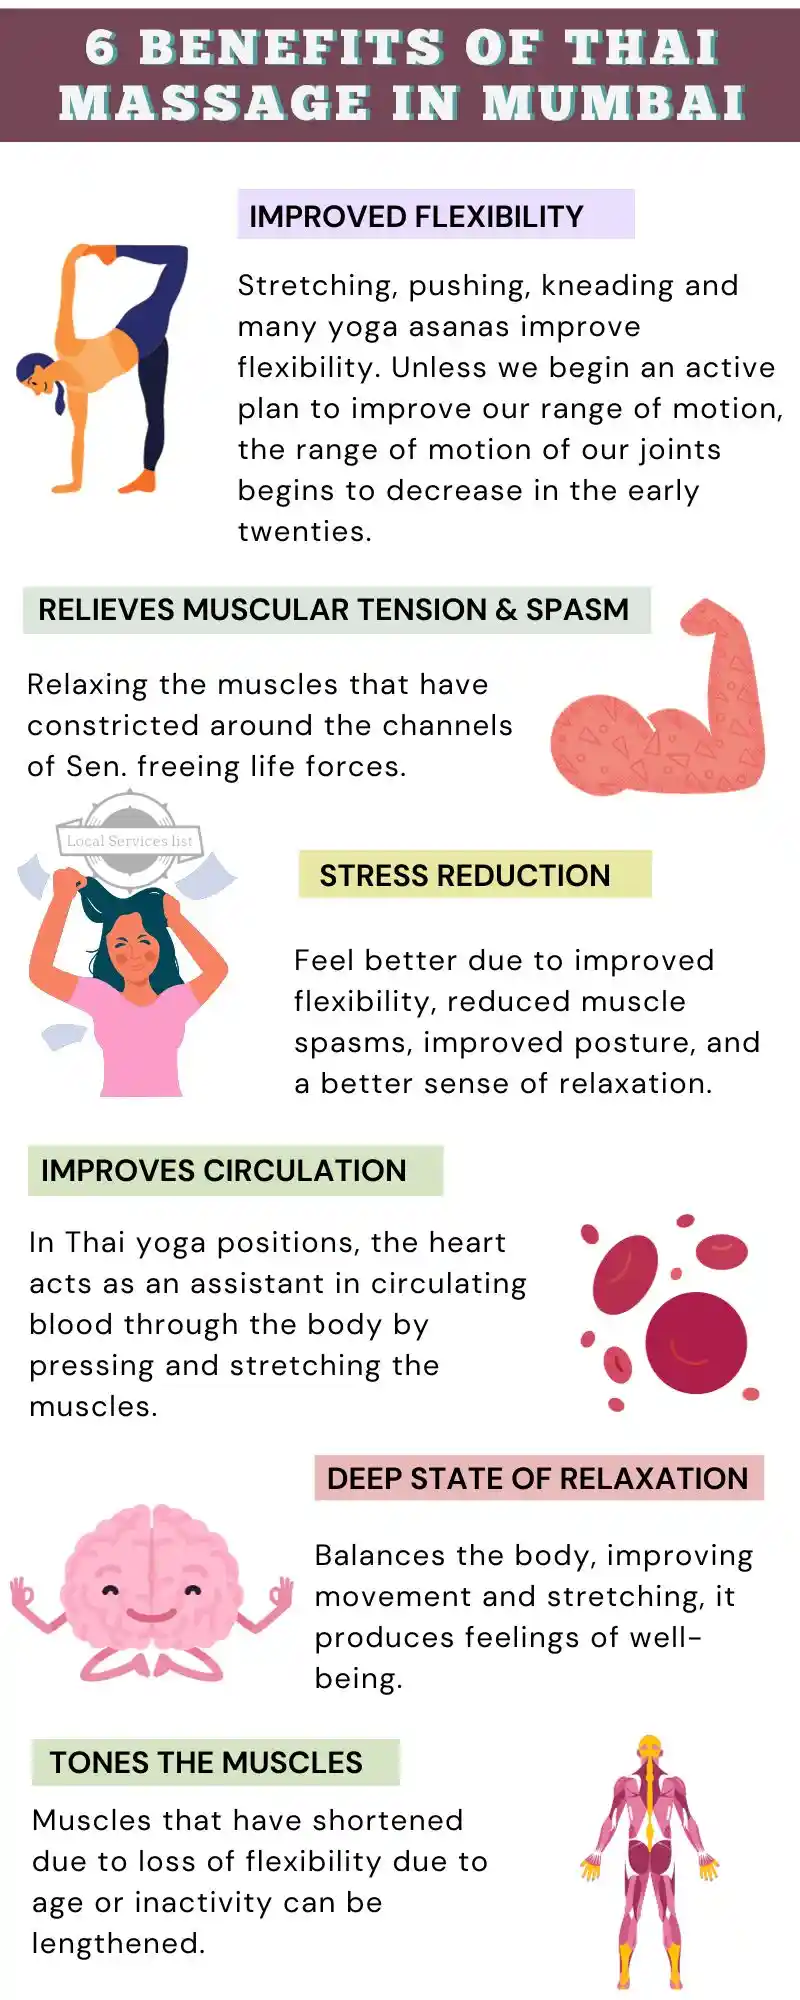 6 Benefits of Thai Massage